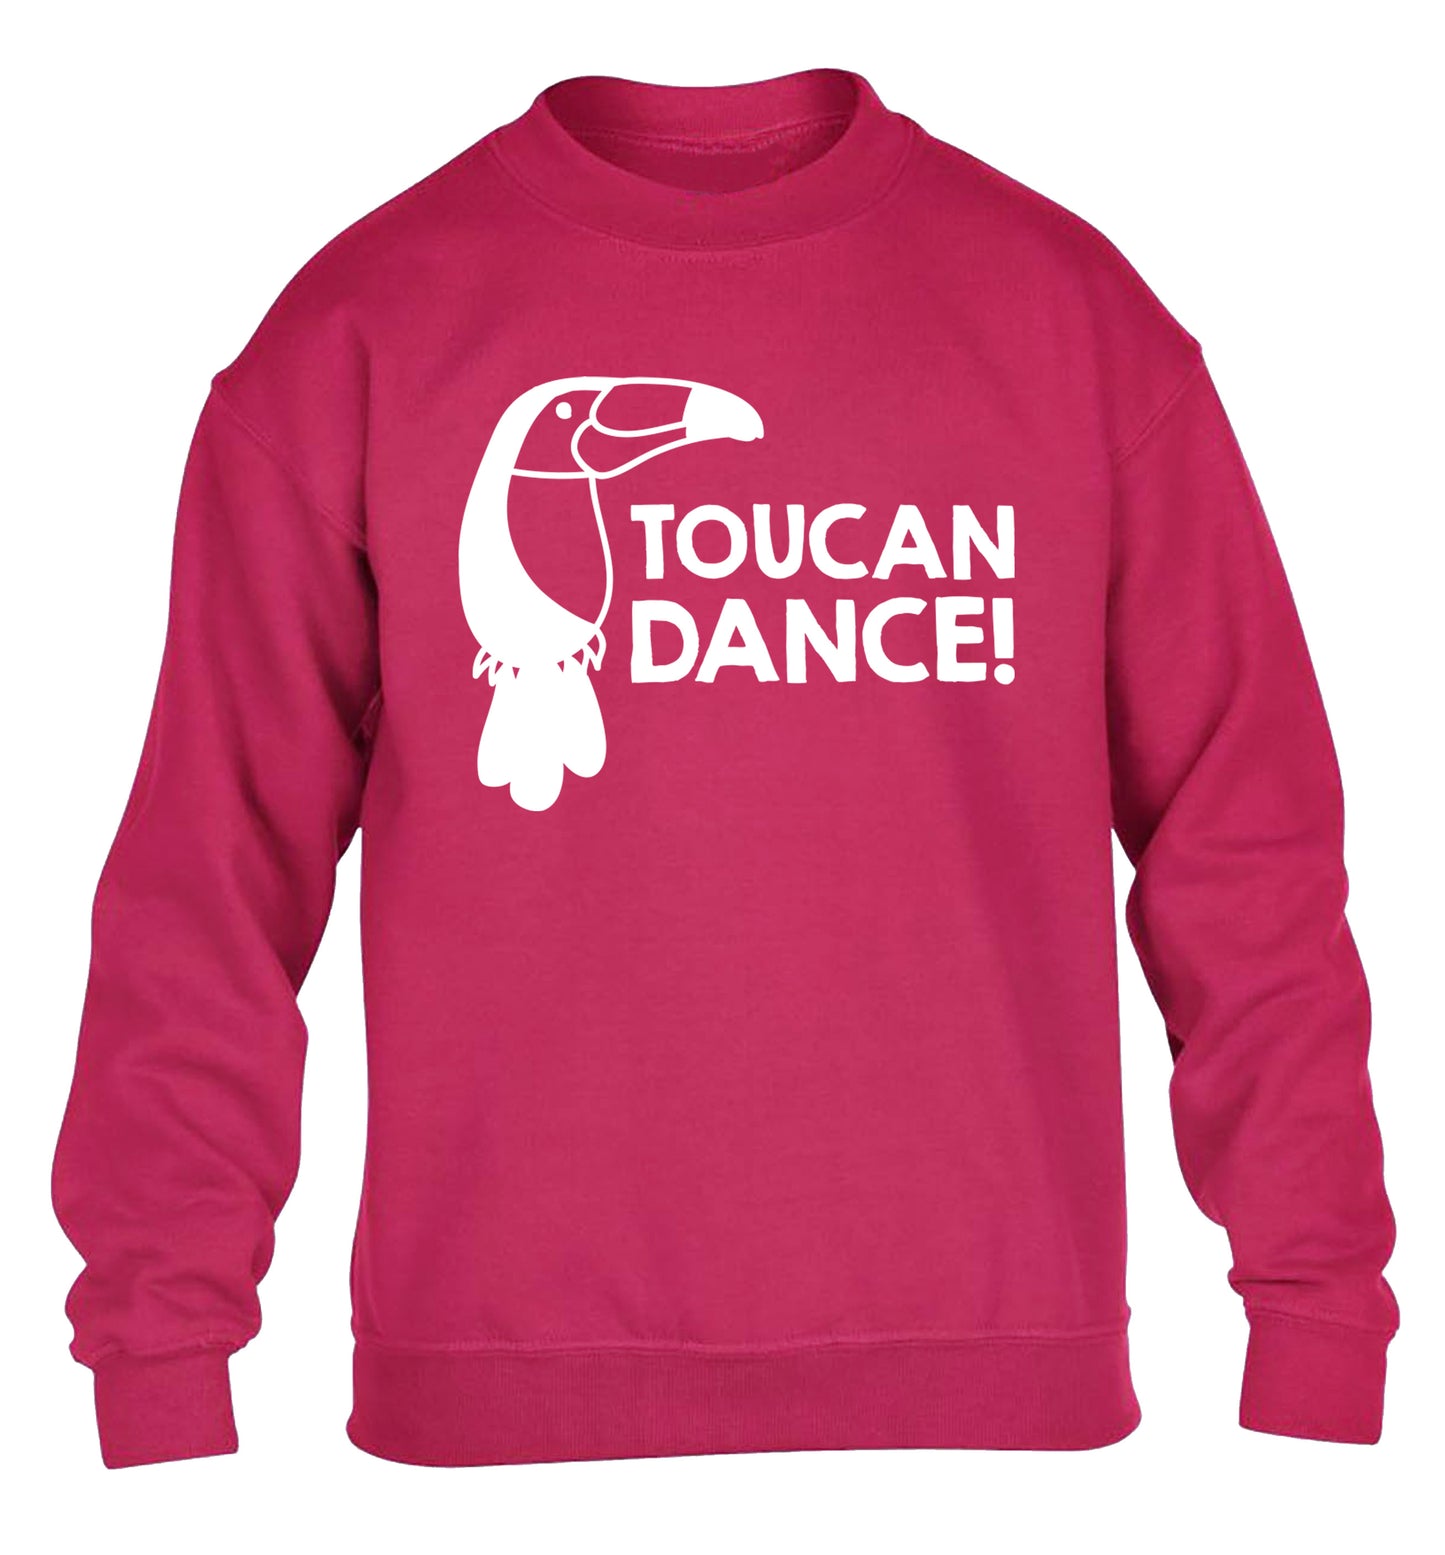 Toucan dance children's pink sweater 12-13 Years